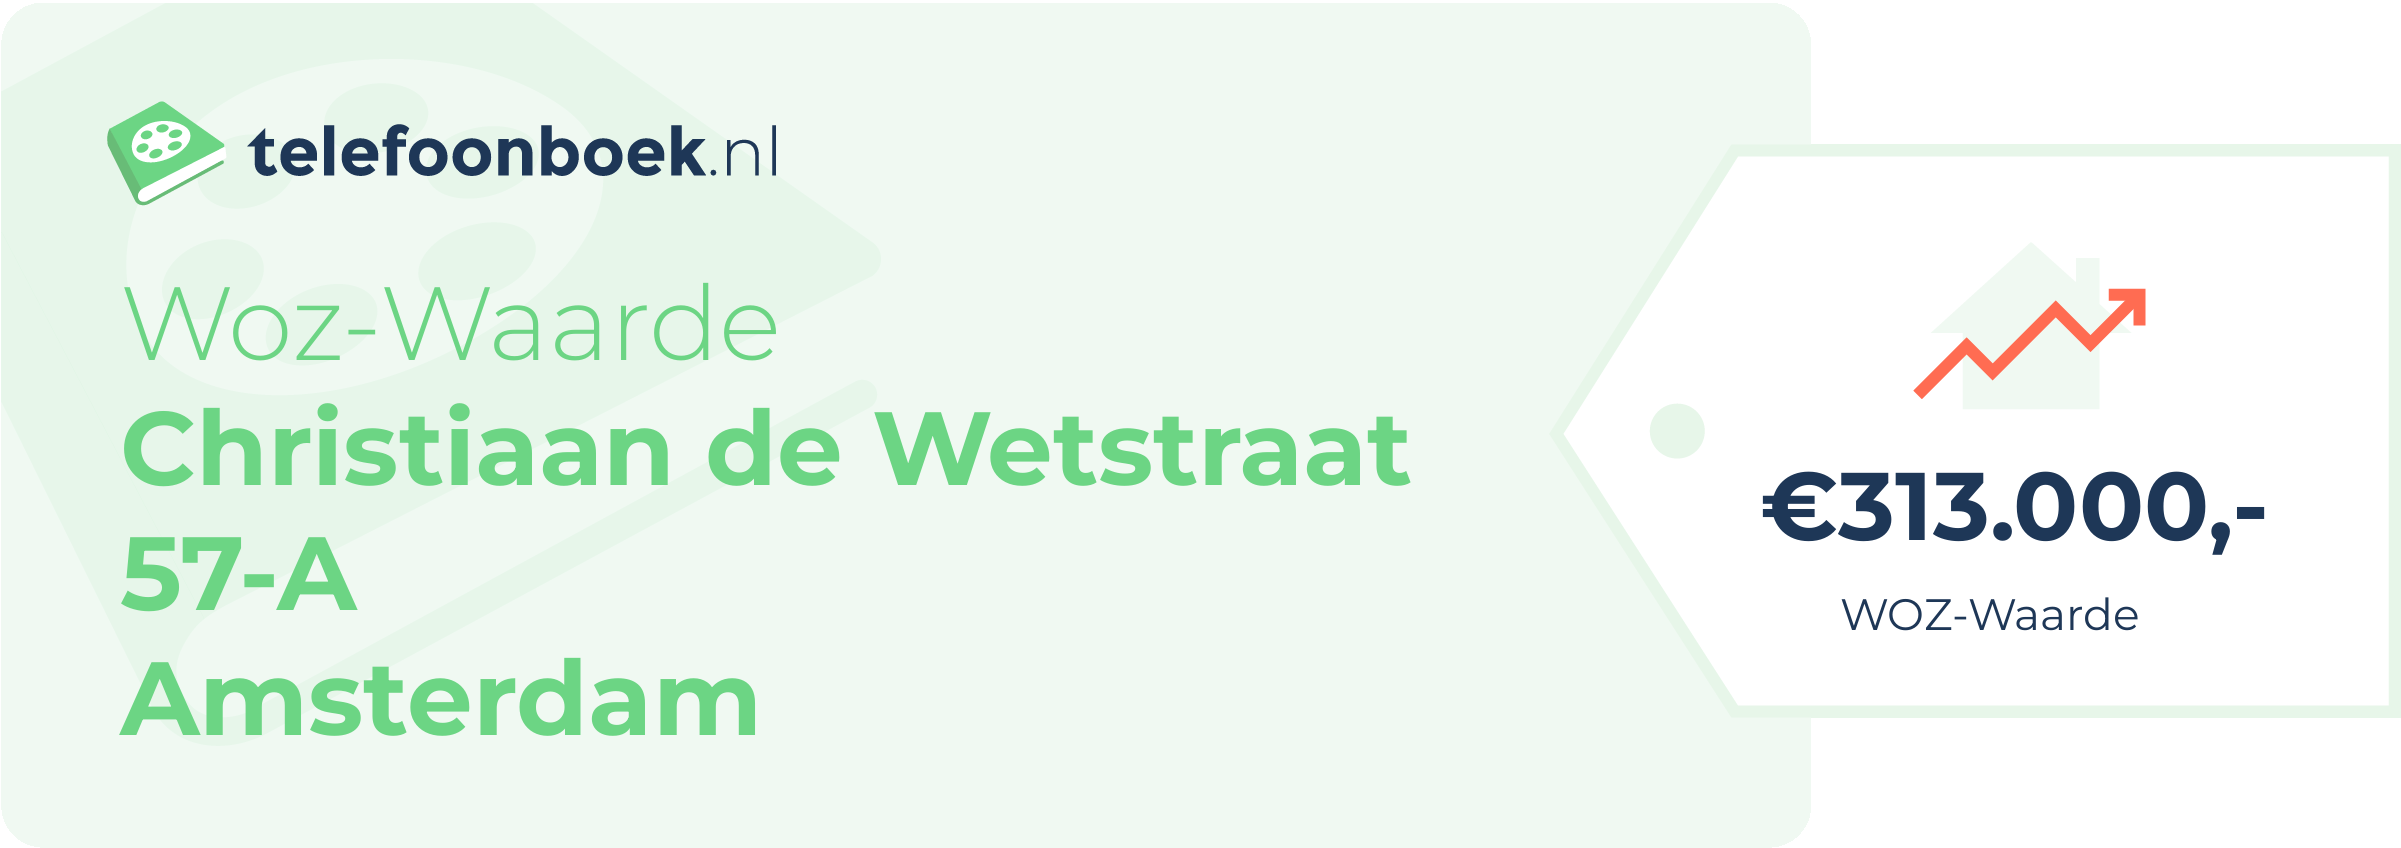 WOZ-waarde Christiaan De Wetstraat 57-A Amsterdam